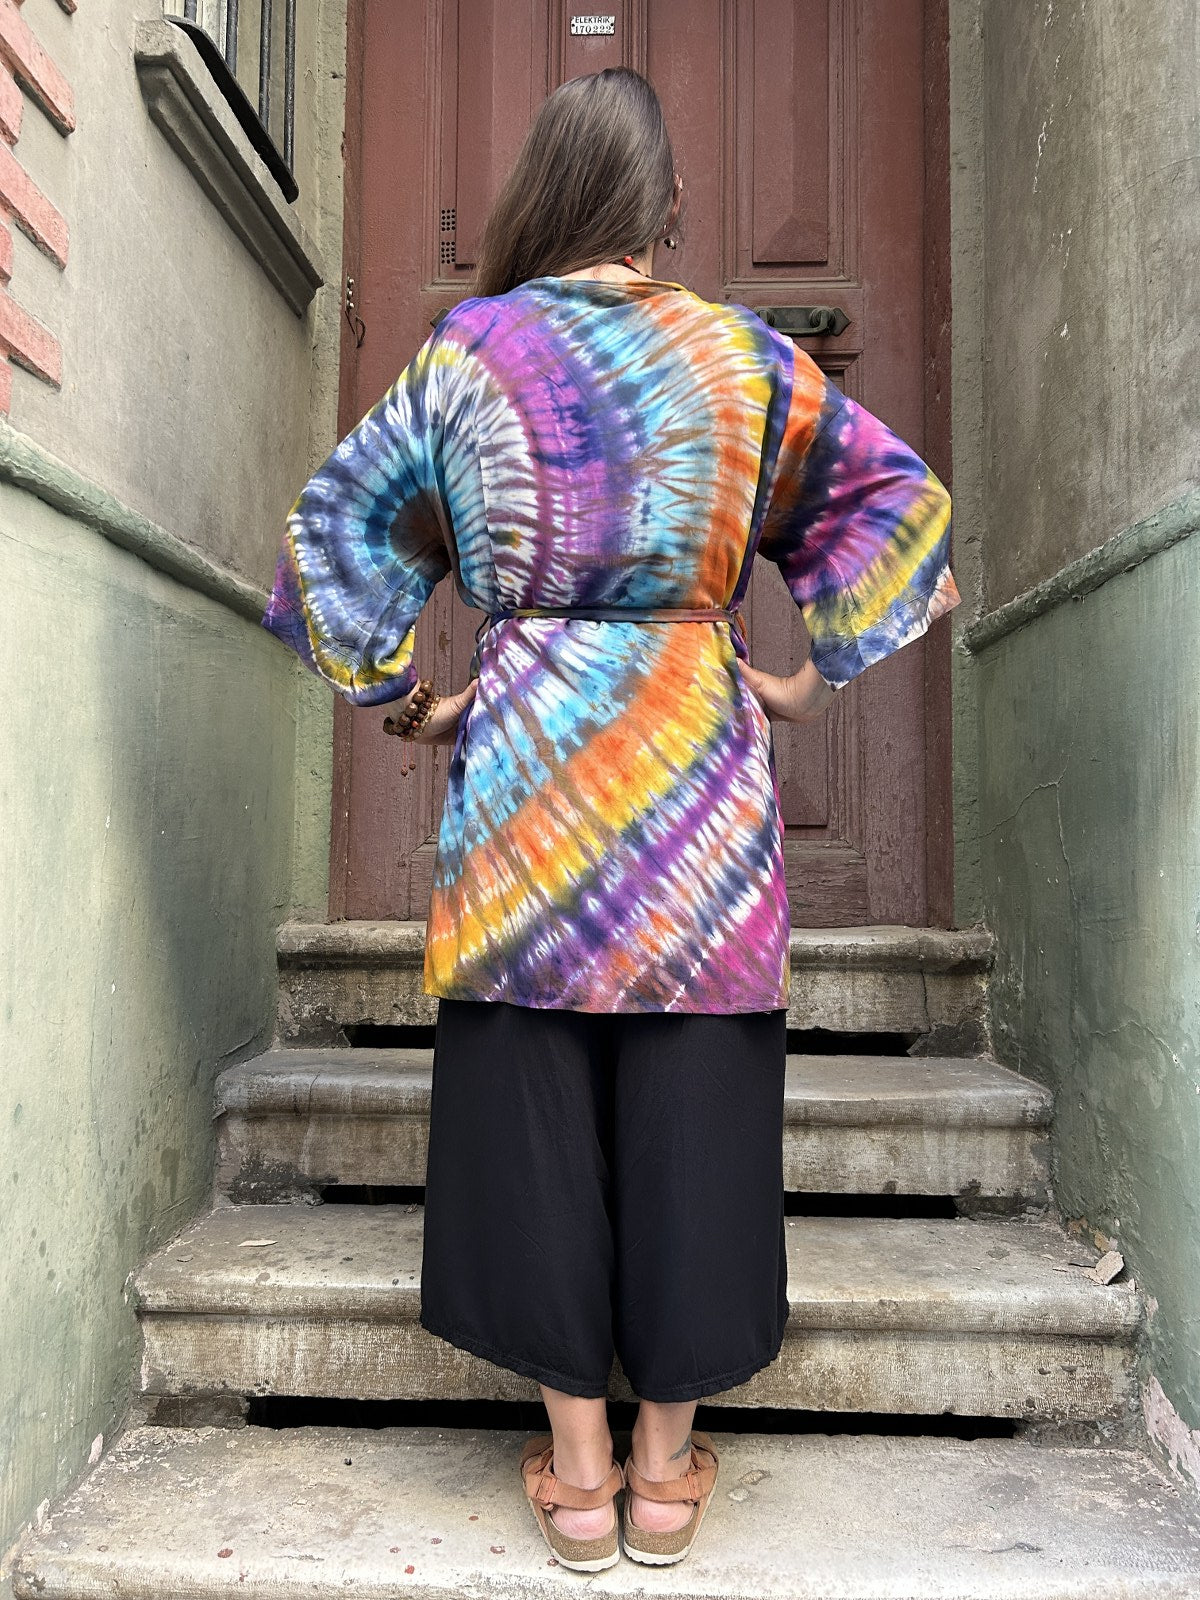 Unisex bohem batik kimono, %100 pamuk batik kumaştan el yapımı, standart beden, rahat ve şık bohem tarzda kimono.